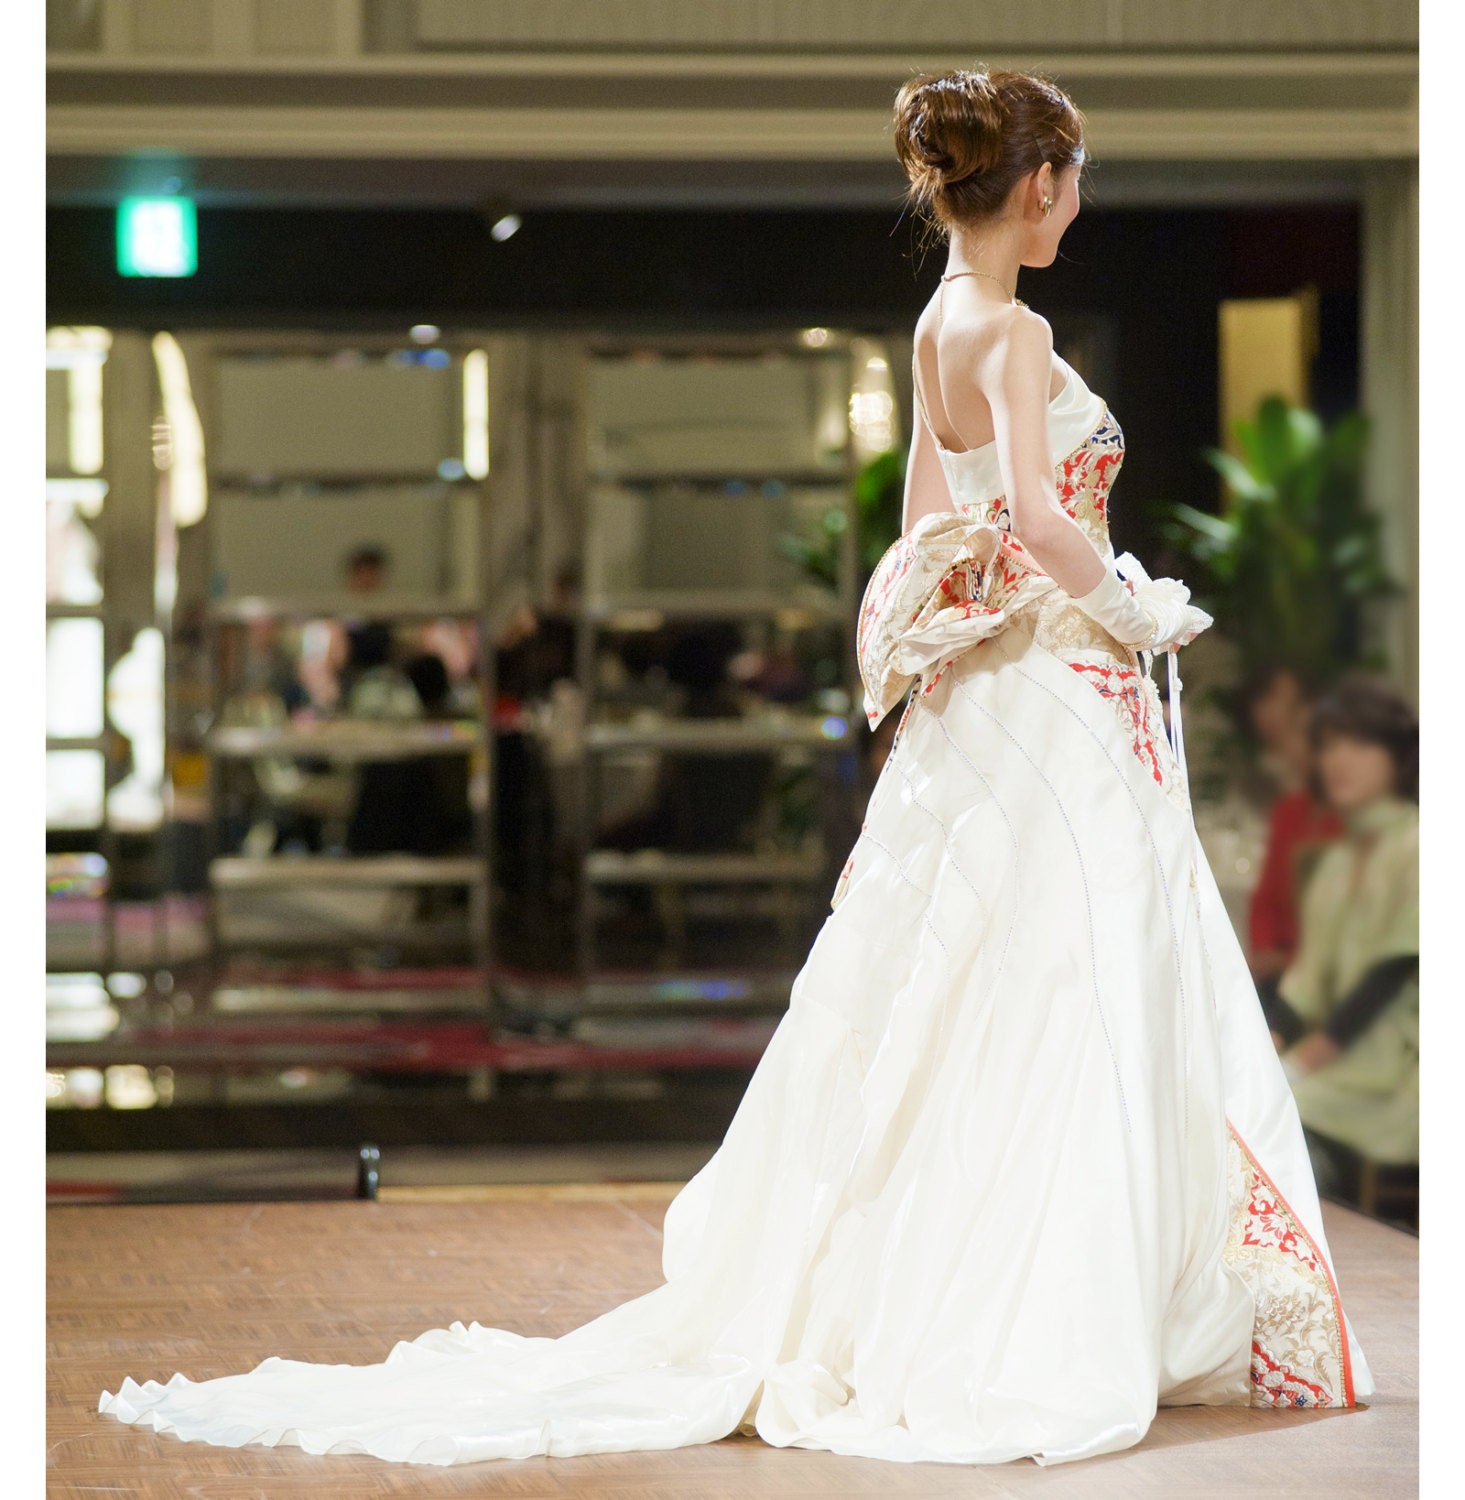 Kimono Wedding Dress Line Features Gowns Made from Antique Kimonos